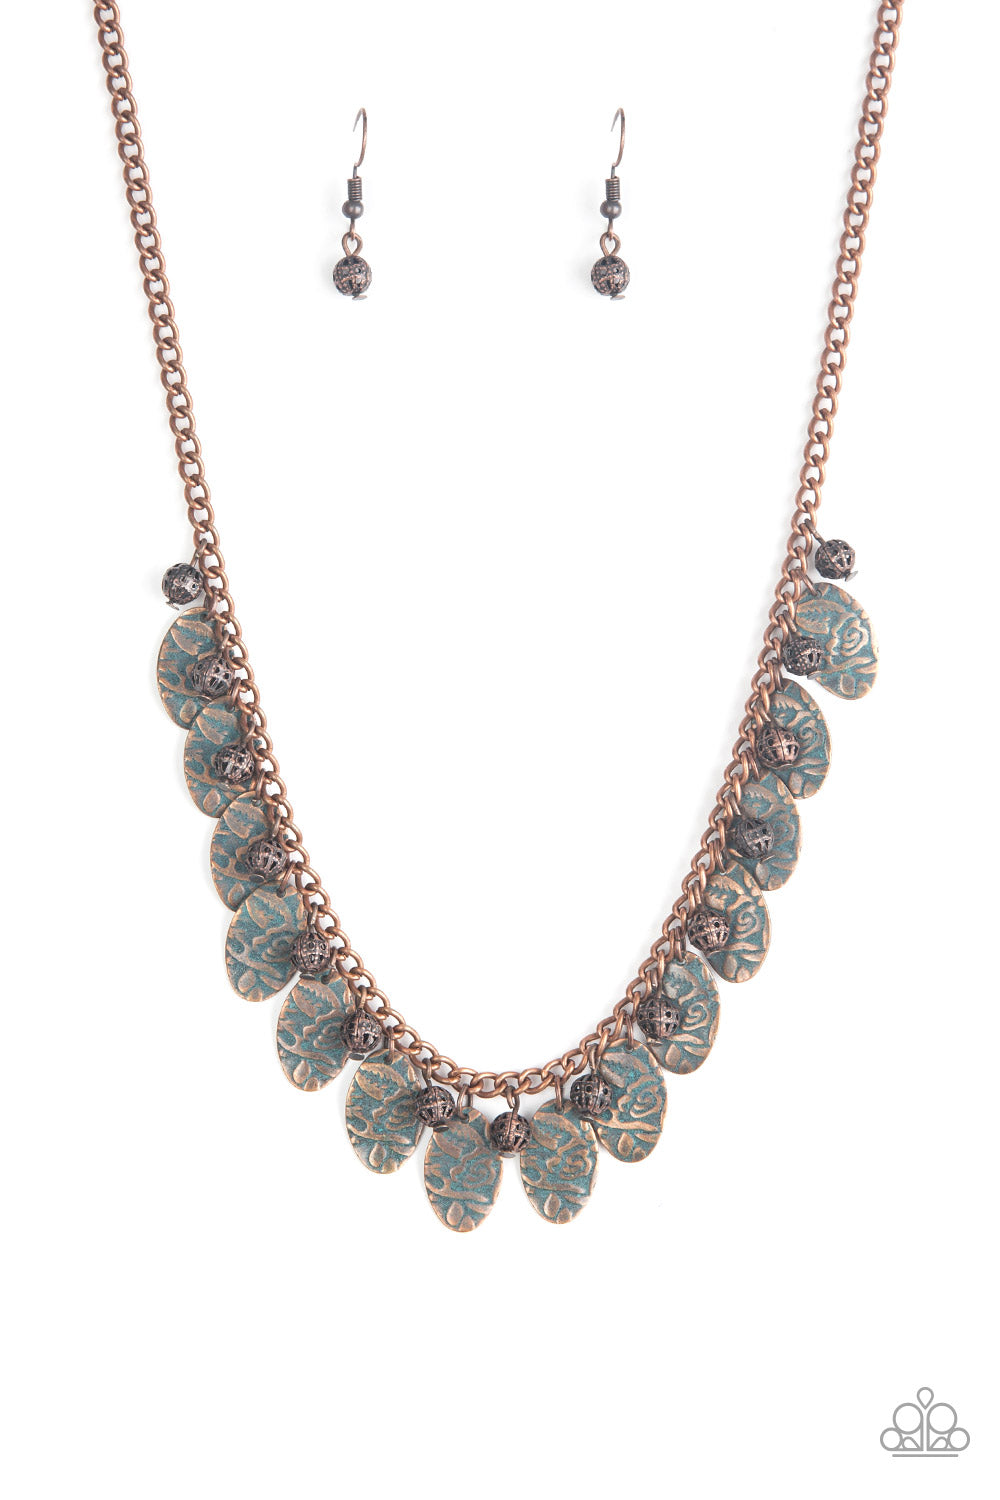 Vintage Gardens - Copper necklace 928